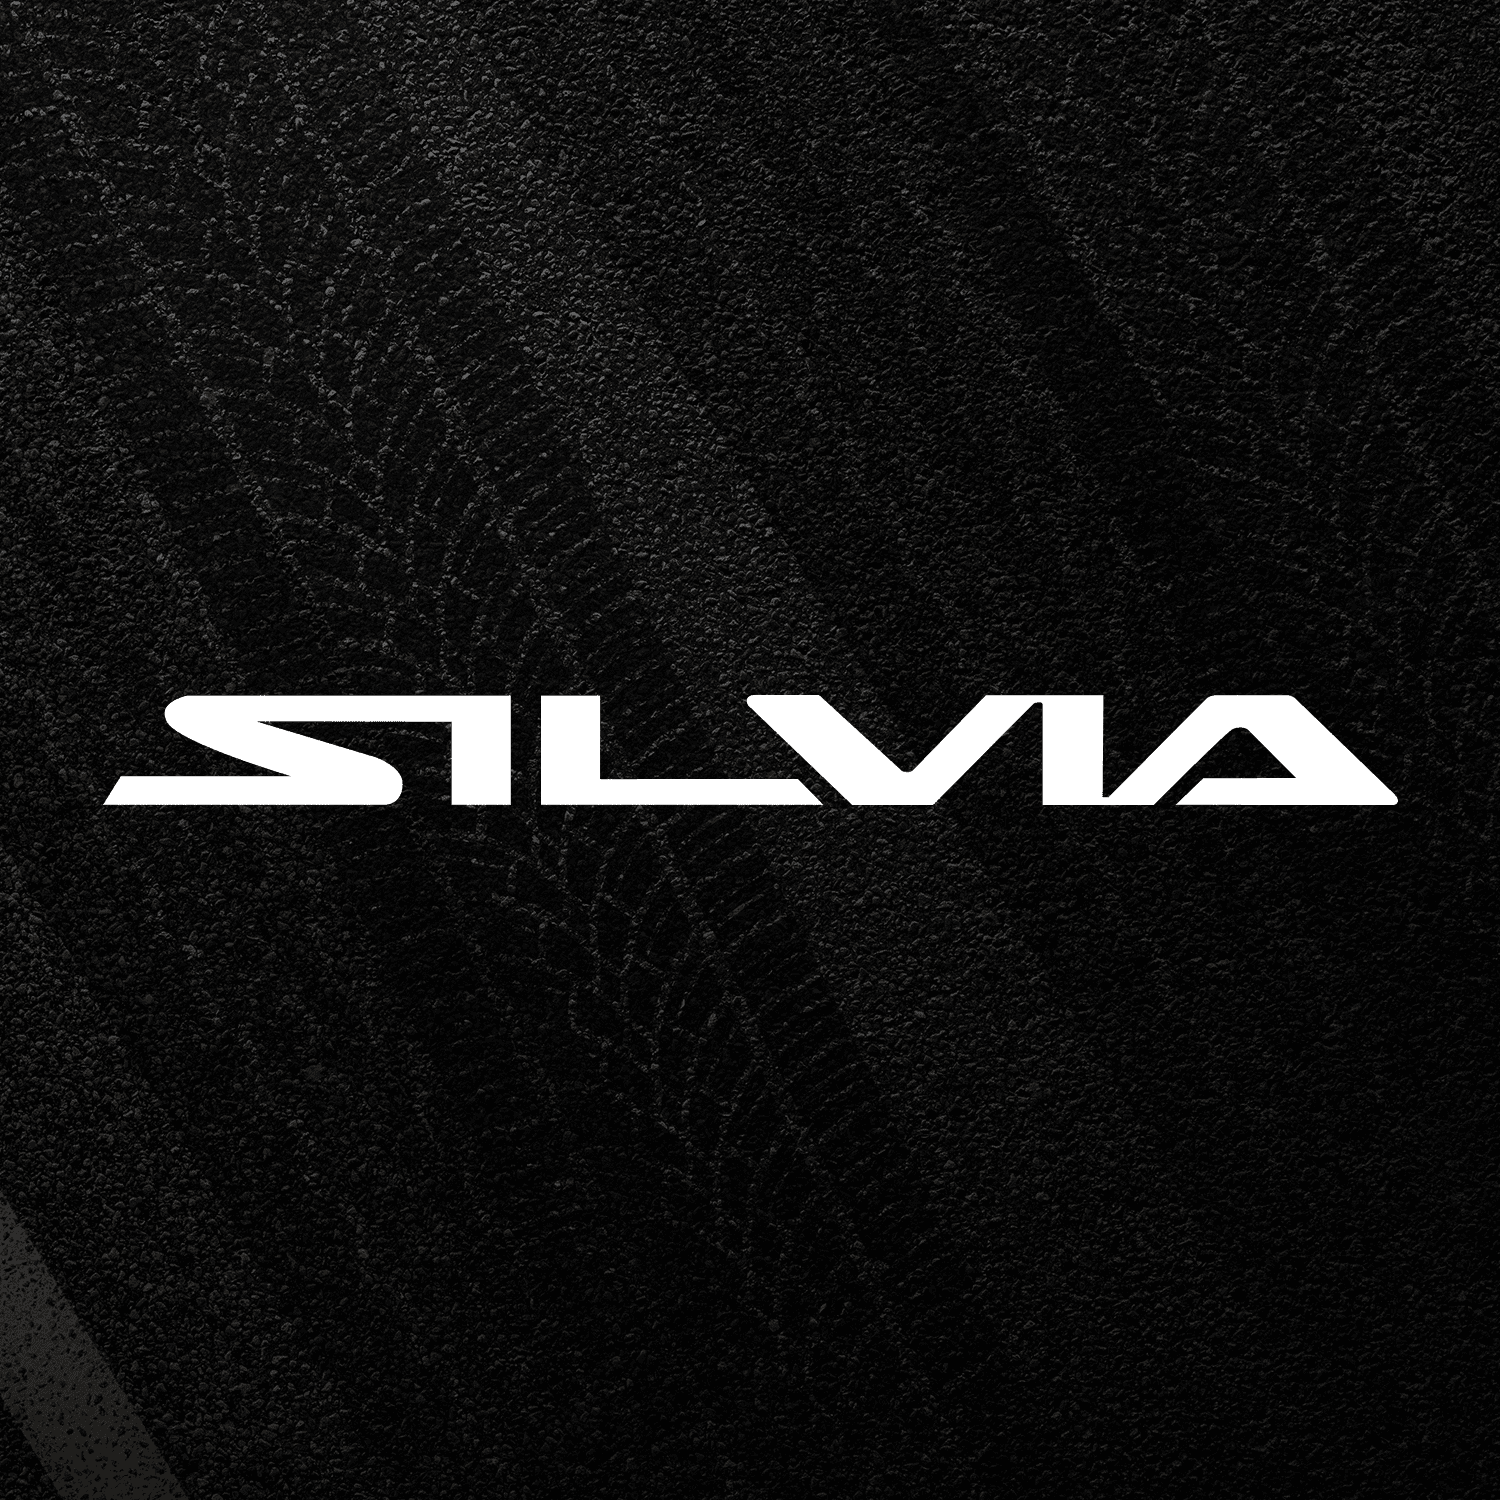 Silvia Logo - Nissan Silvia Sticker Emblem JDM Drift S13 S14 S15 | eBay